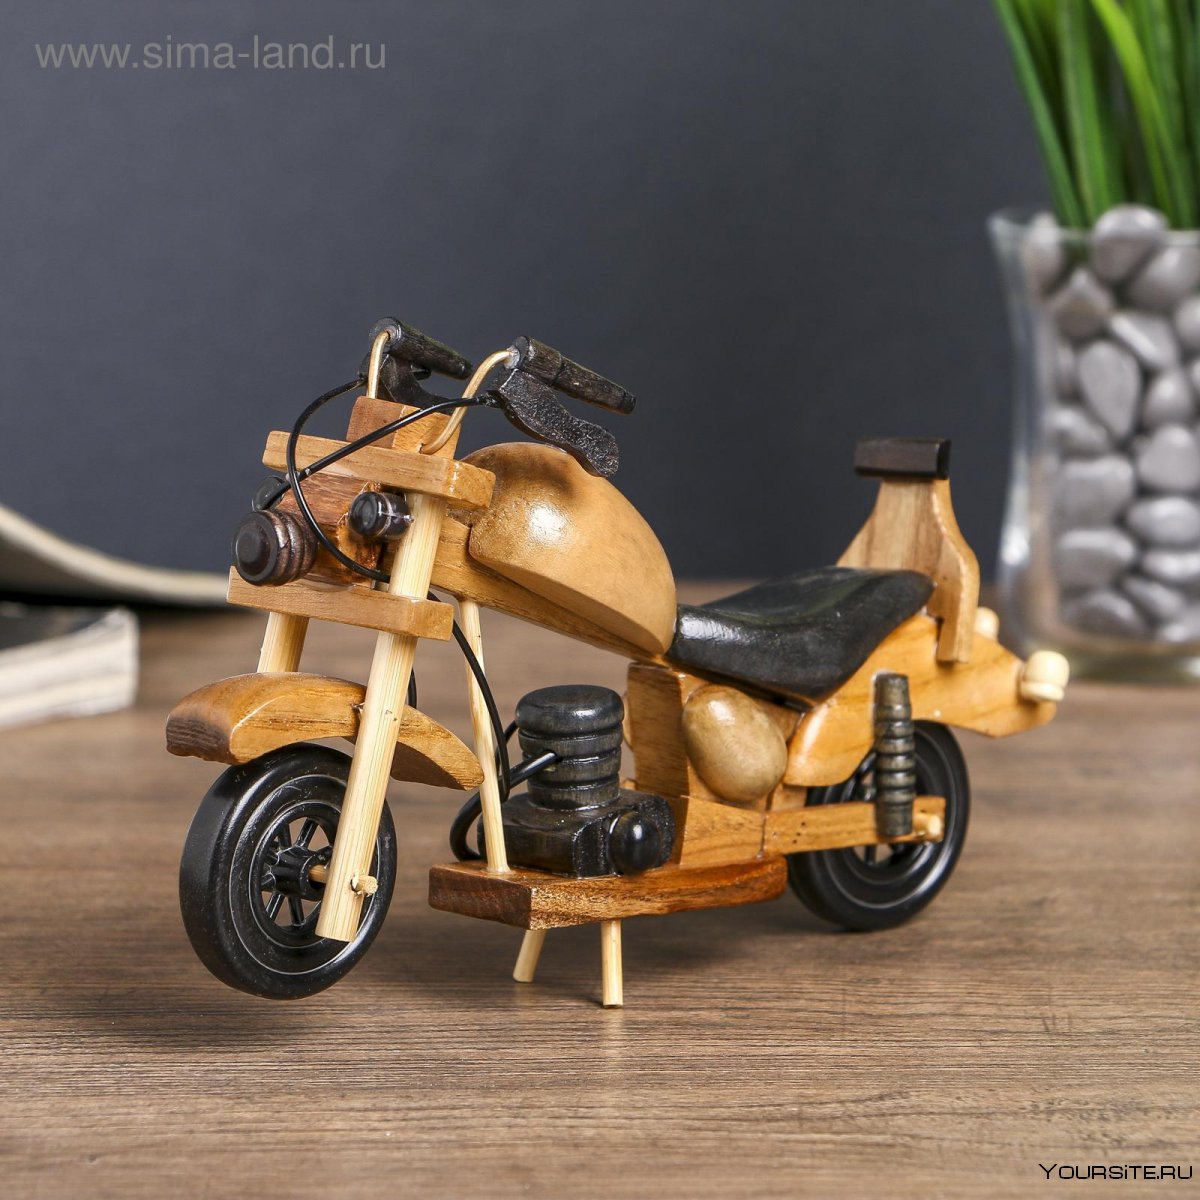 Африканский мотоцикл из дерева